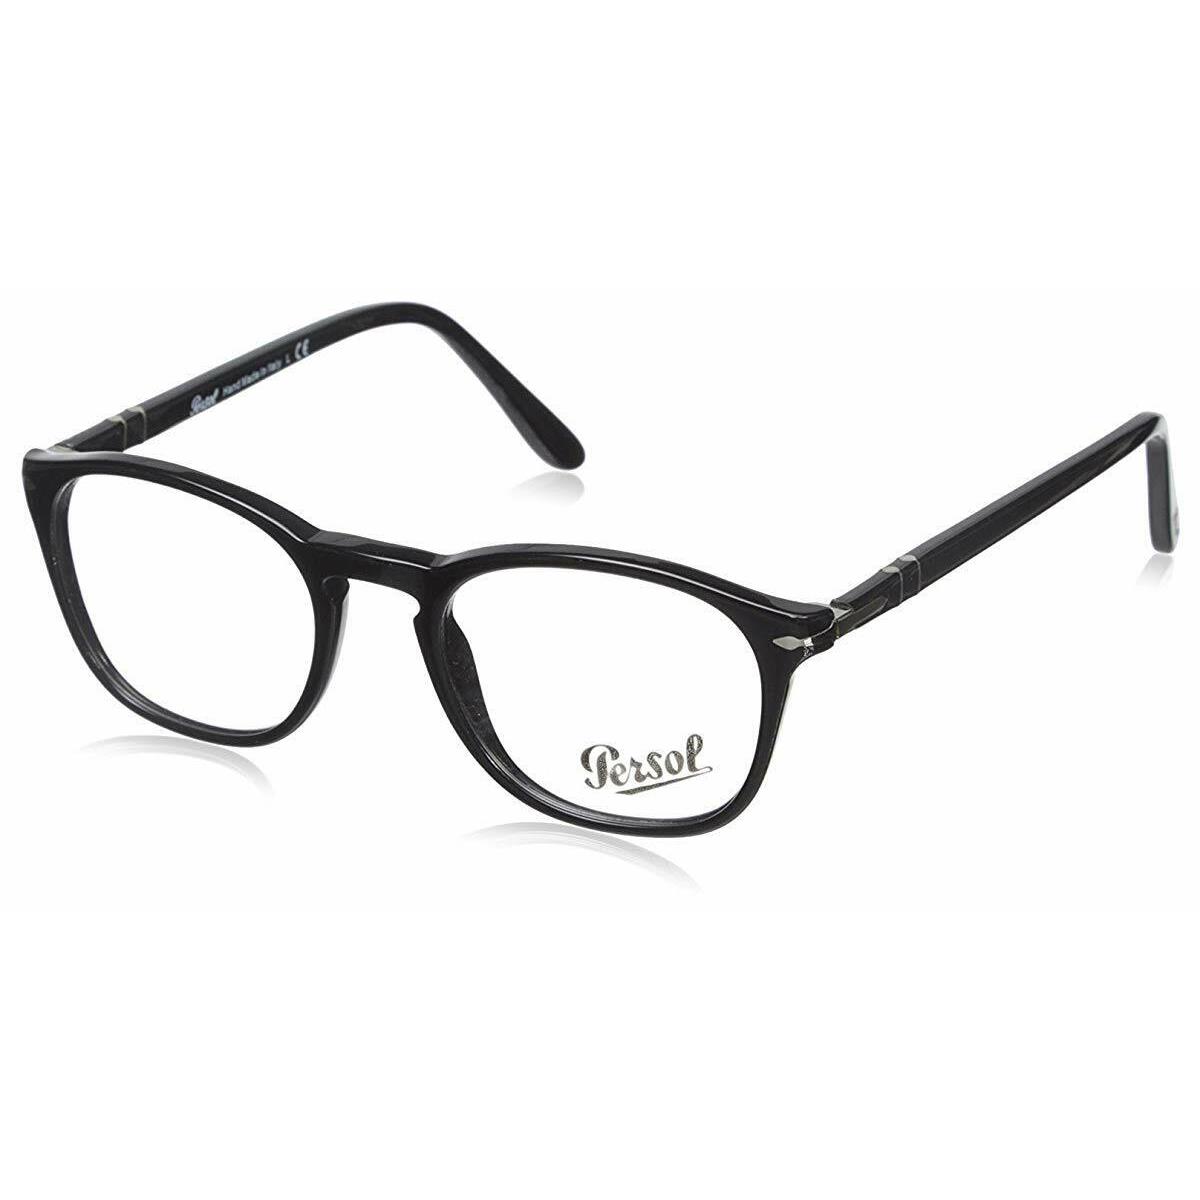 Persol Square Eyeglasses PO3007V 95 50mm Black / Demo Lens